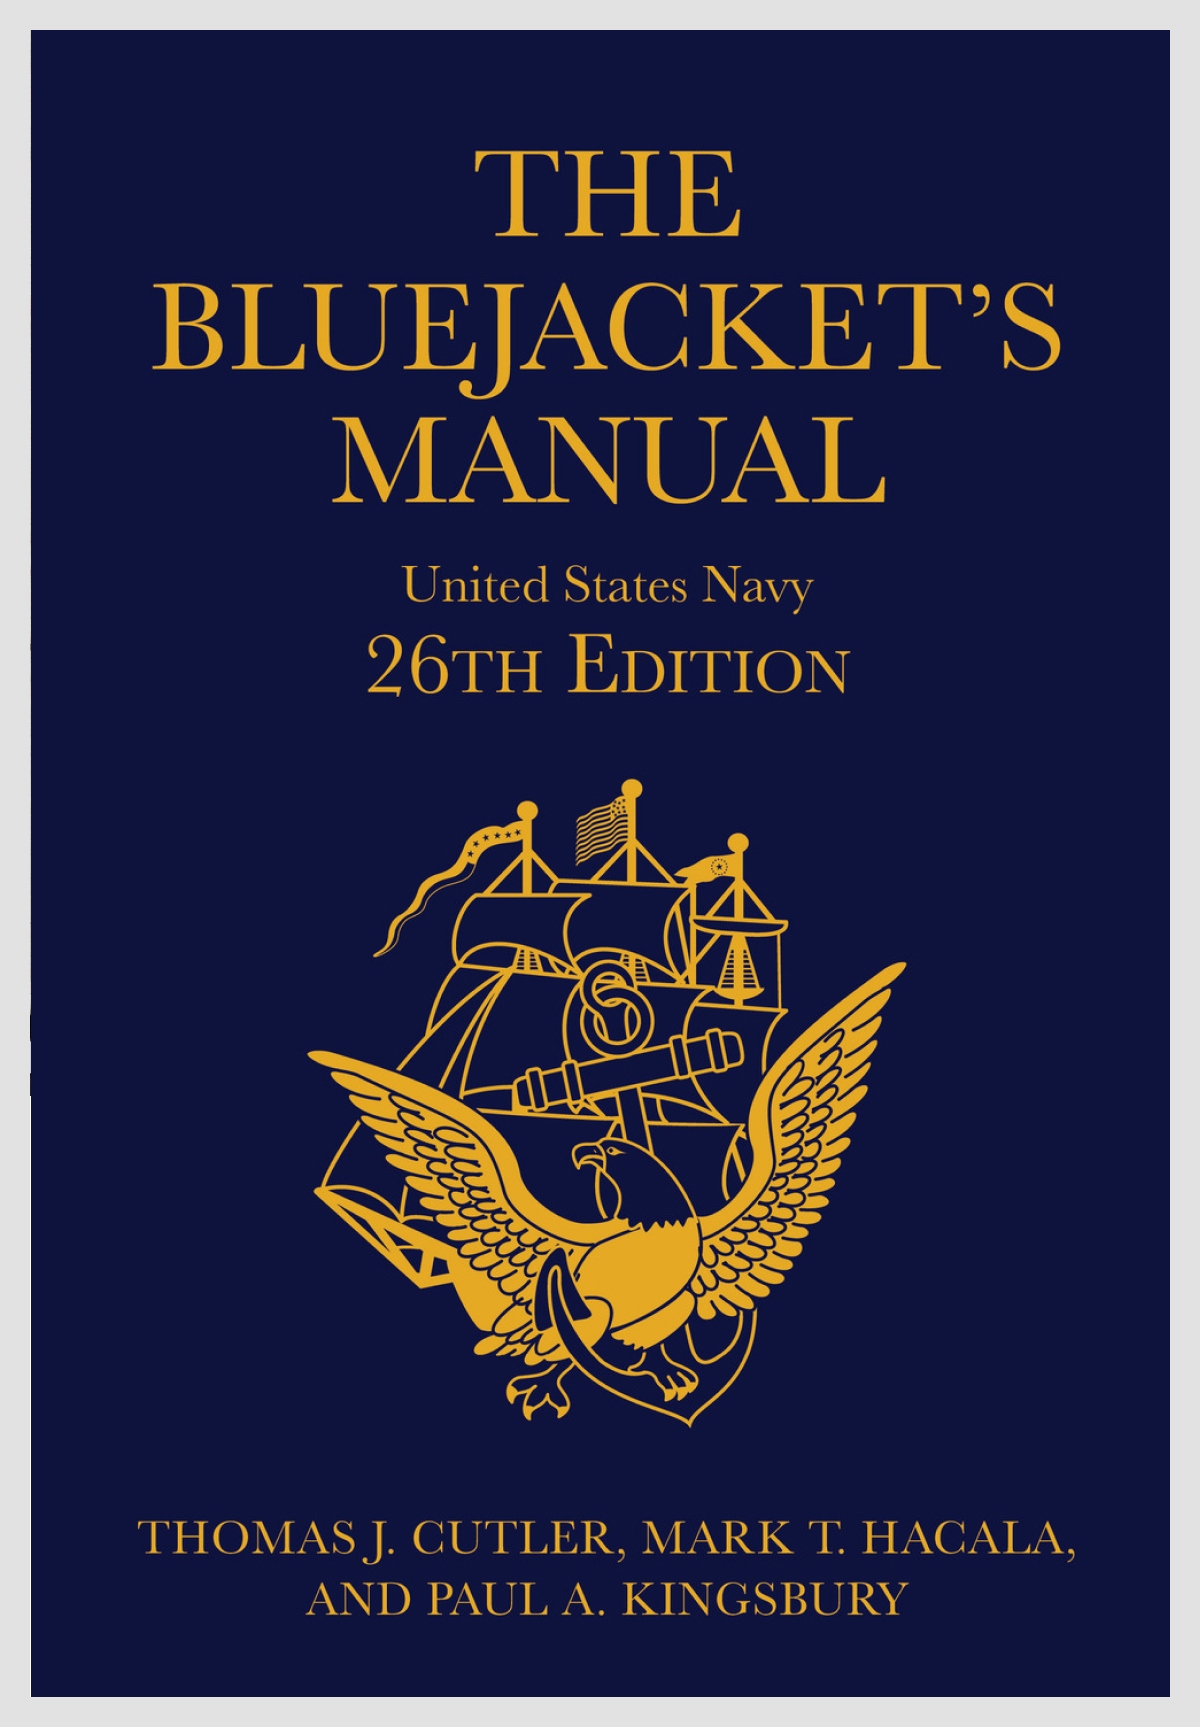 USNI Anniversary: The Bluejacket's Manual | World of Warships